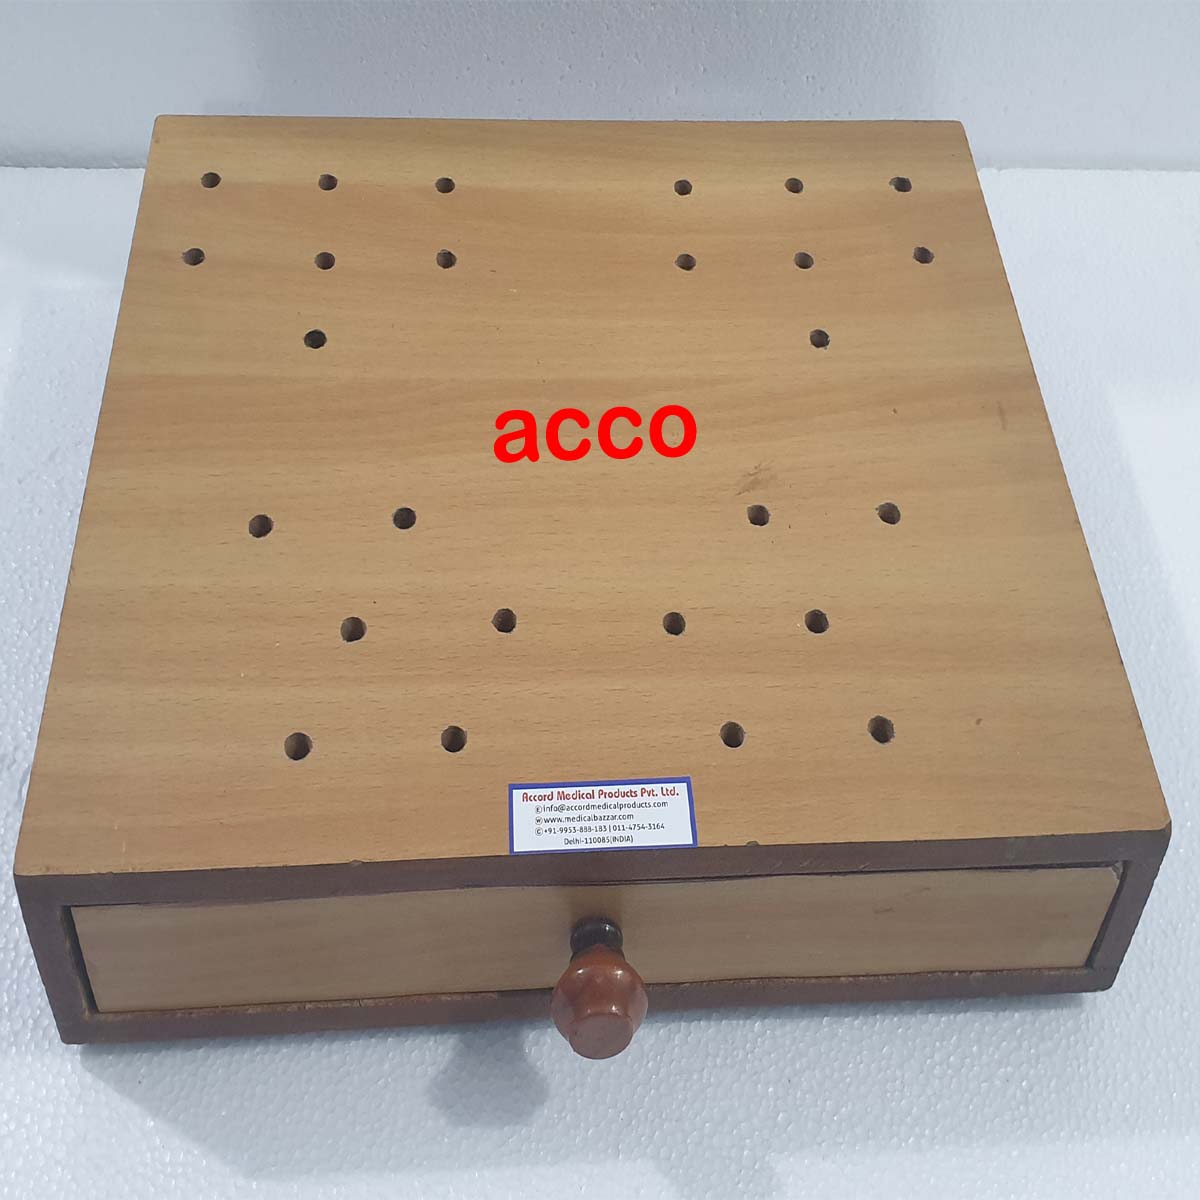 acco Hand Gym Kit Board